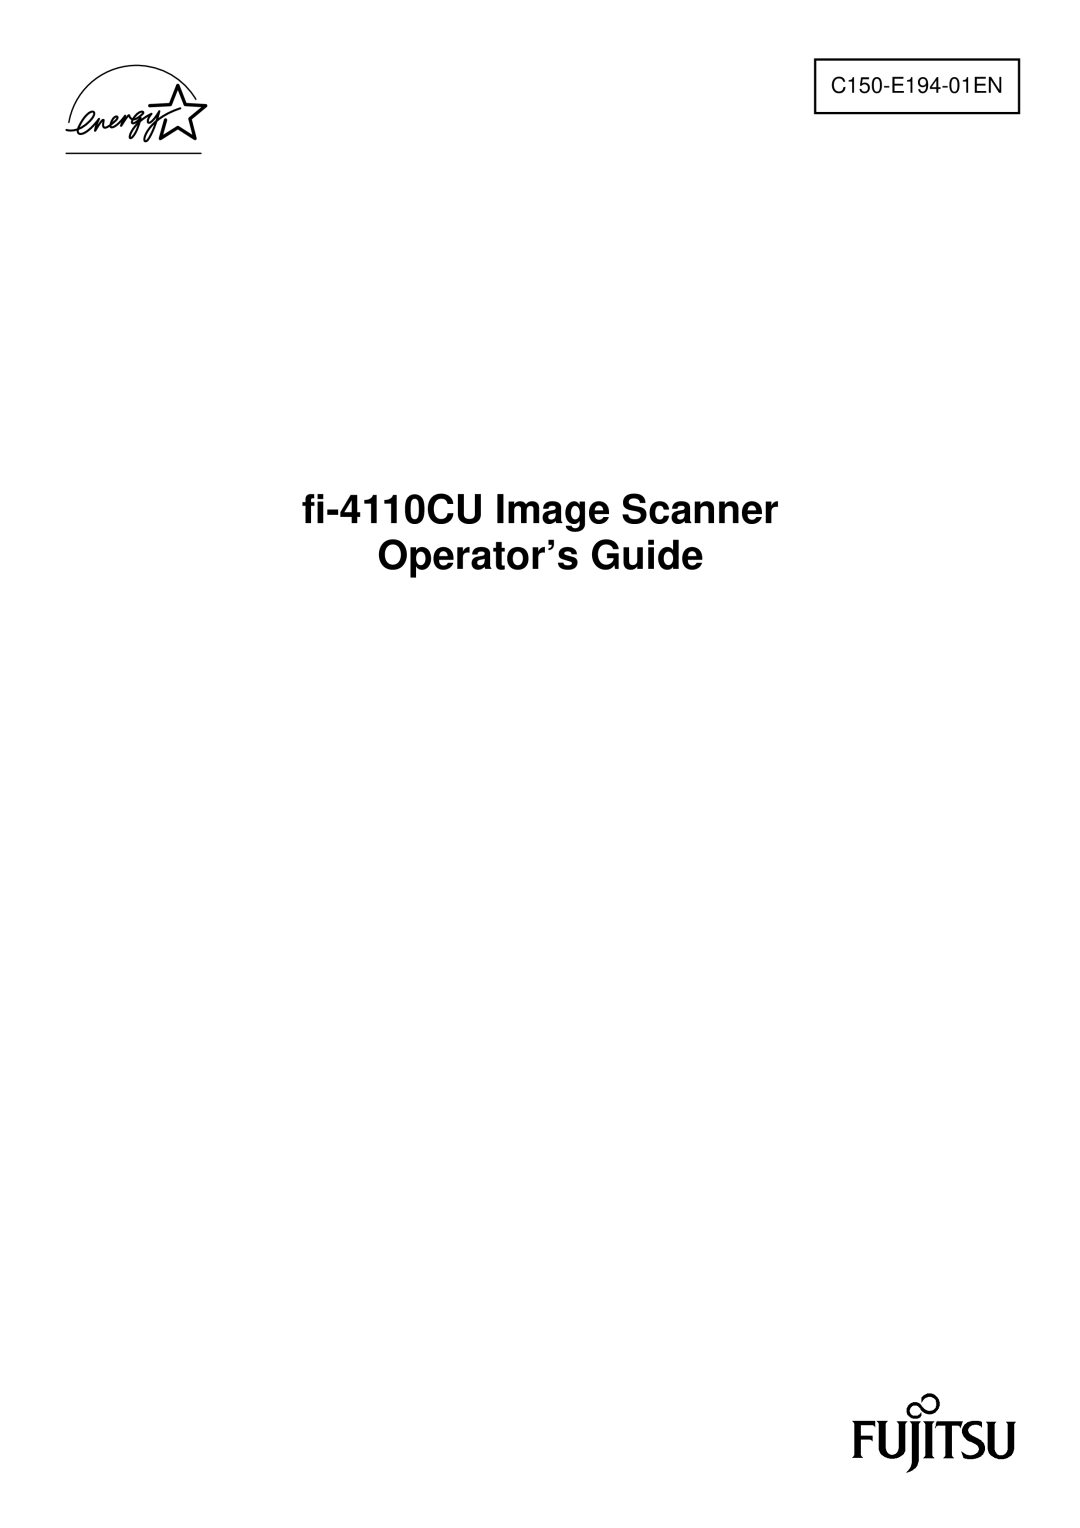 Fujitsu C150-E194-01EN manual fi-4110CU Image Scanner Operator’s Guide 